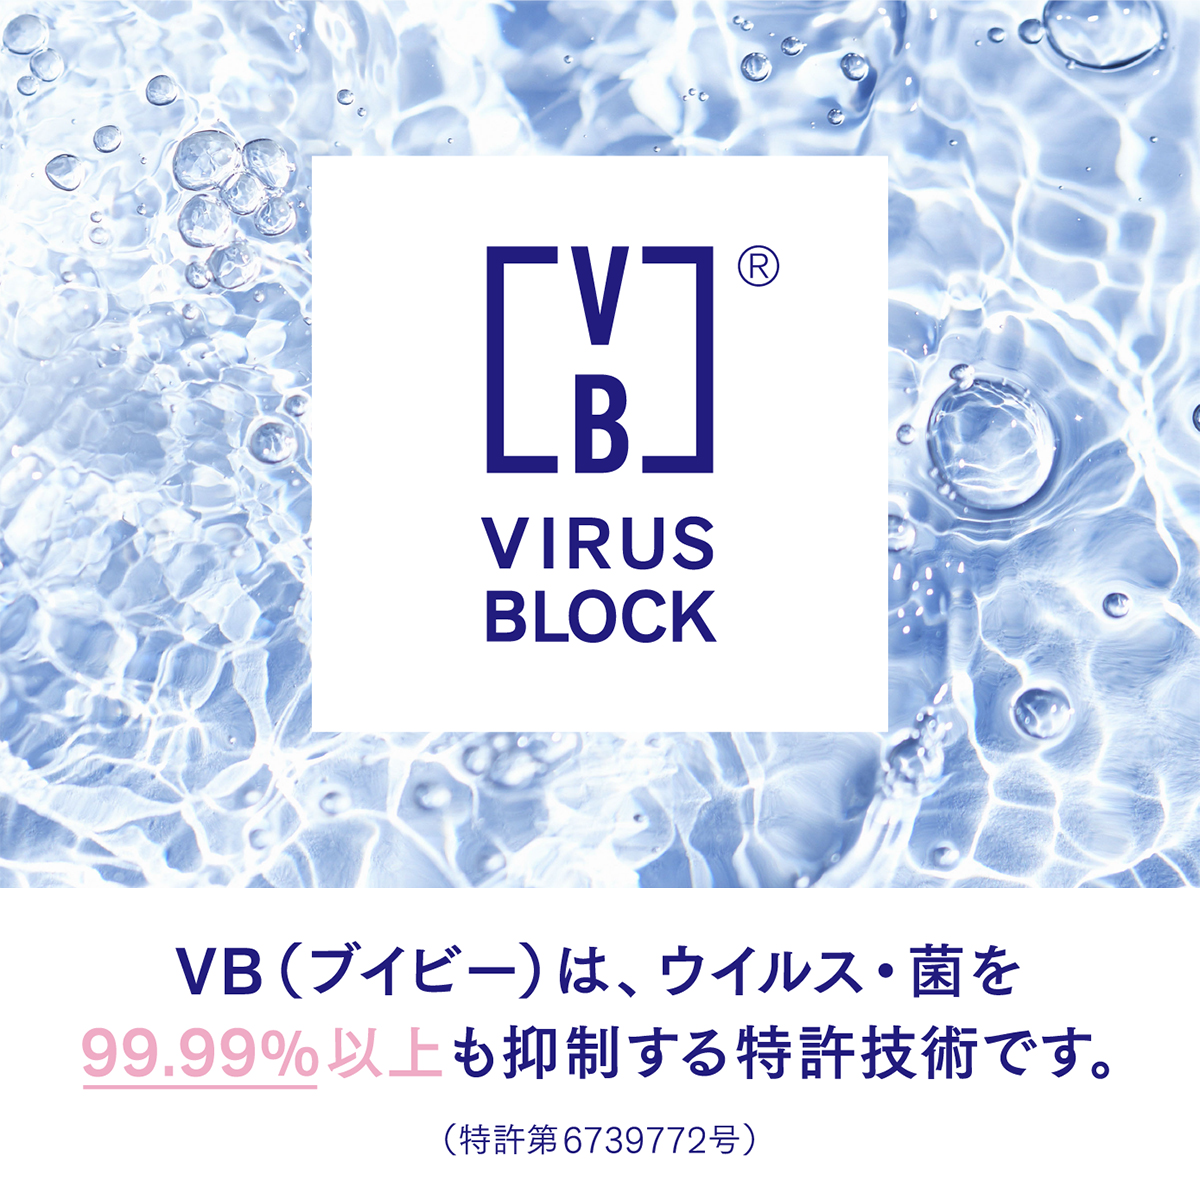 VBは、ウイルス・金の働きを99.99％以上も抑制する特許技術です。（特許5314219号）